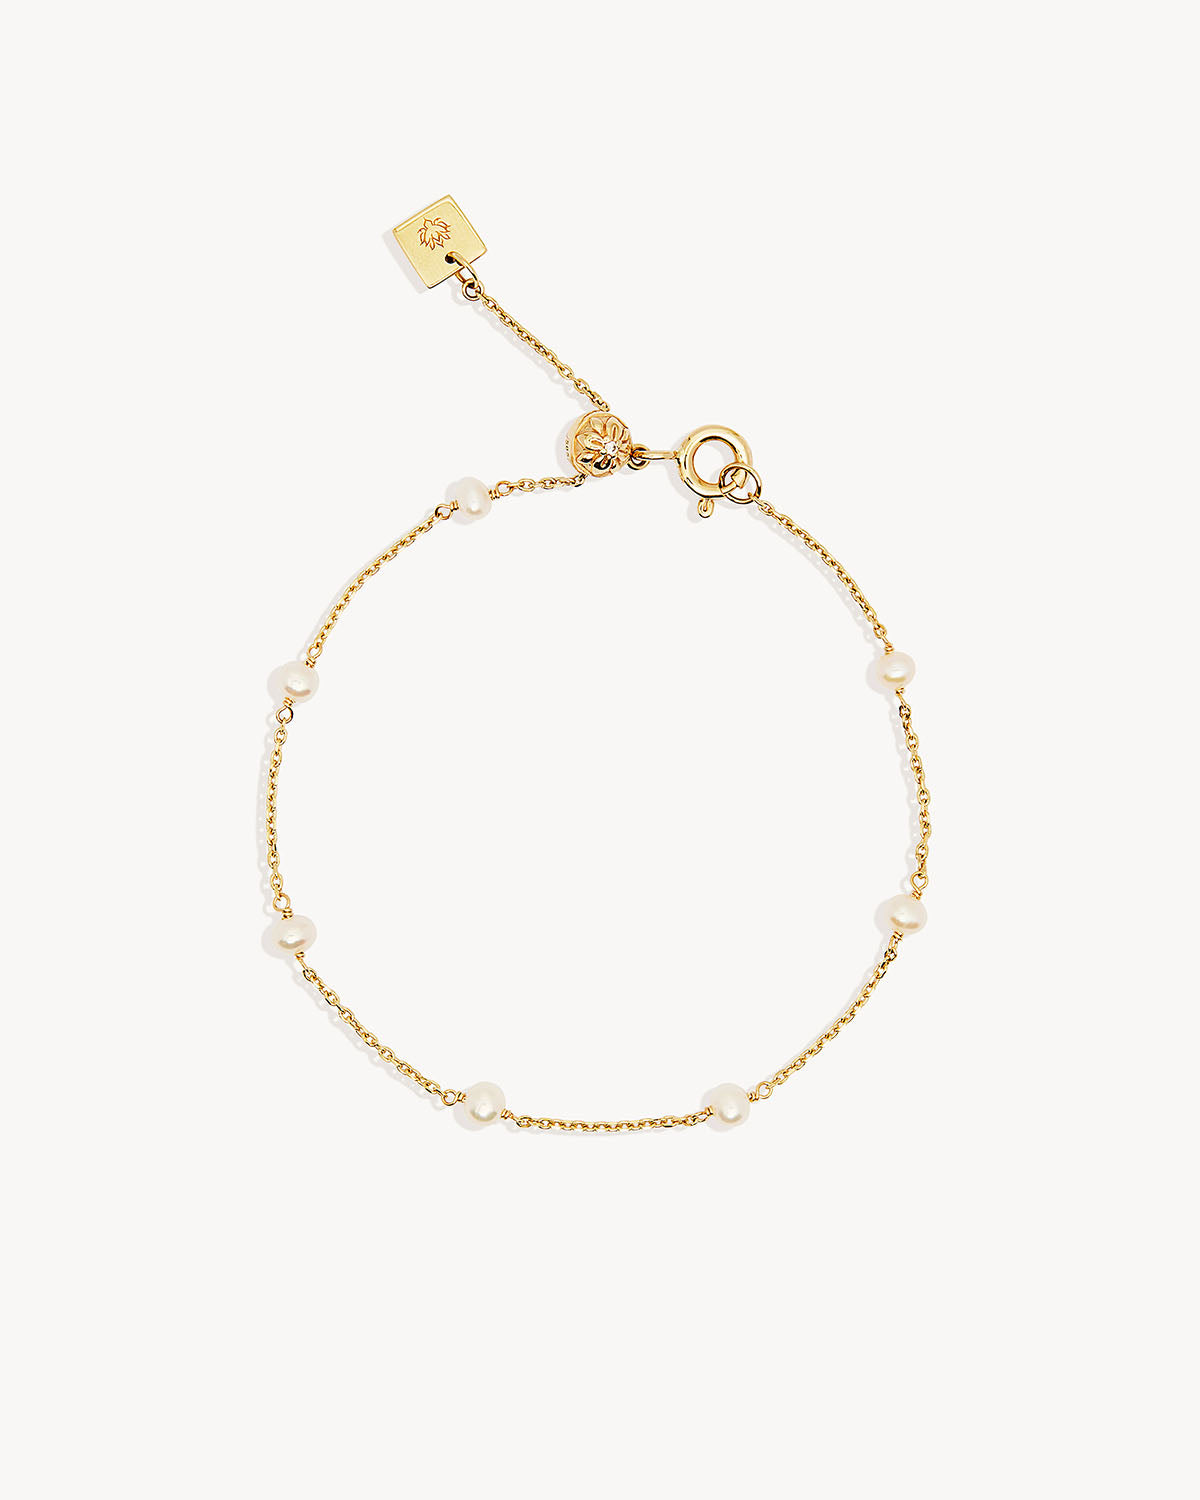 Vintage Pearl Bracelet - 14K Gold Plating - 4 Sizes - ApolloBox